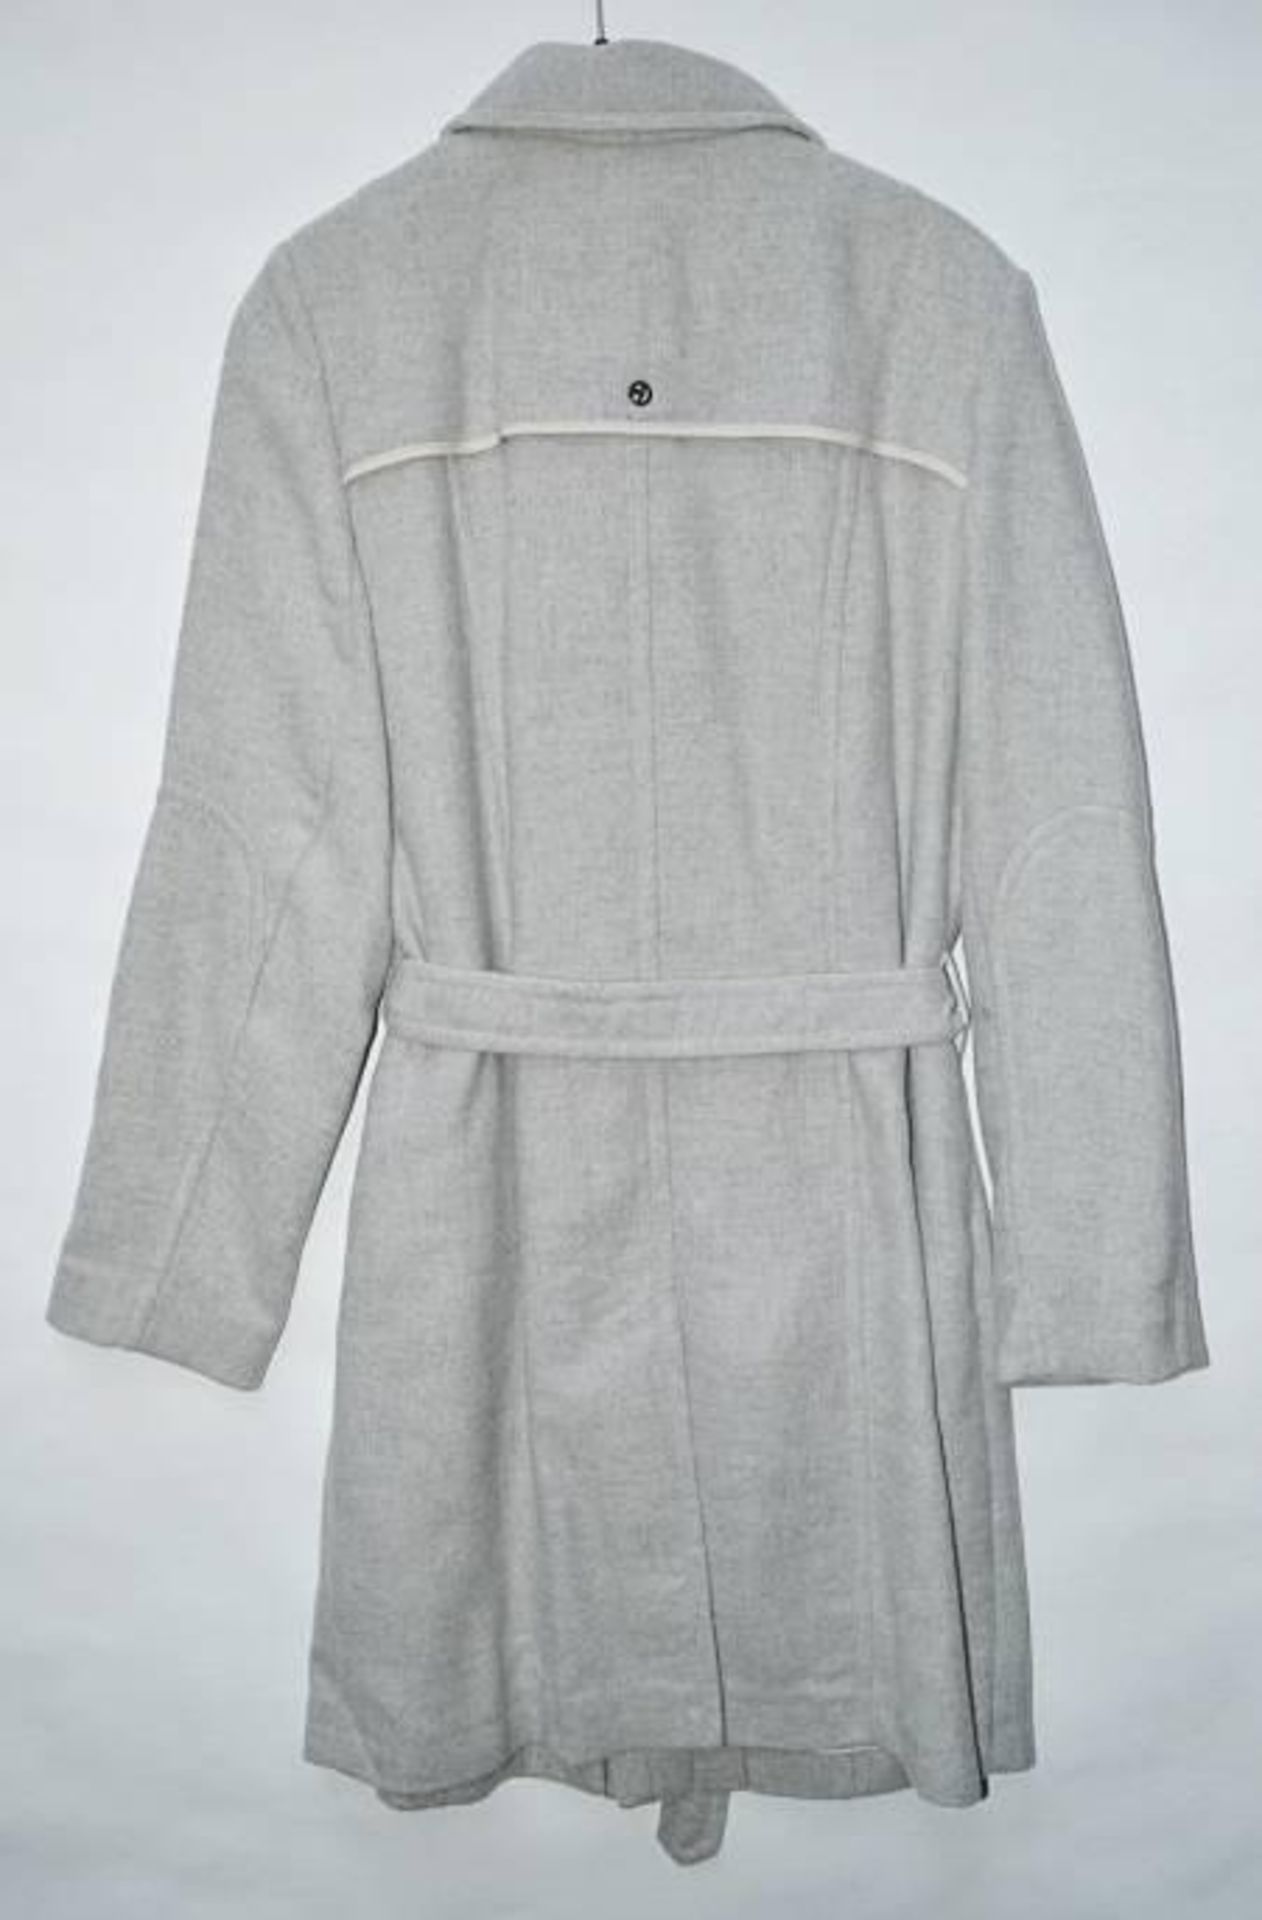 1 x Steilmann Kirsten Womens Wool Blend Belted Winter Coat In Light Grey - Size 12 - CL210 - Ref MT6 - Image 4 of 4